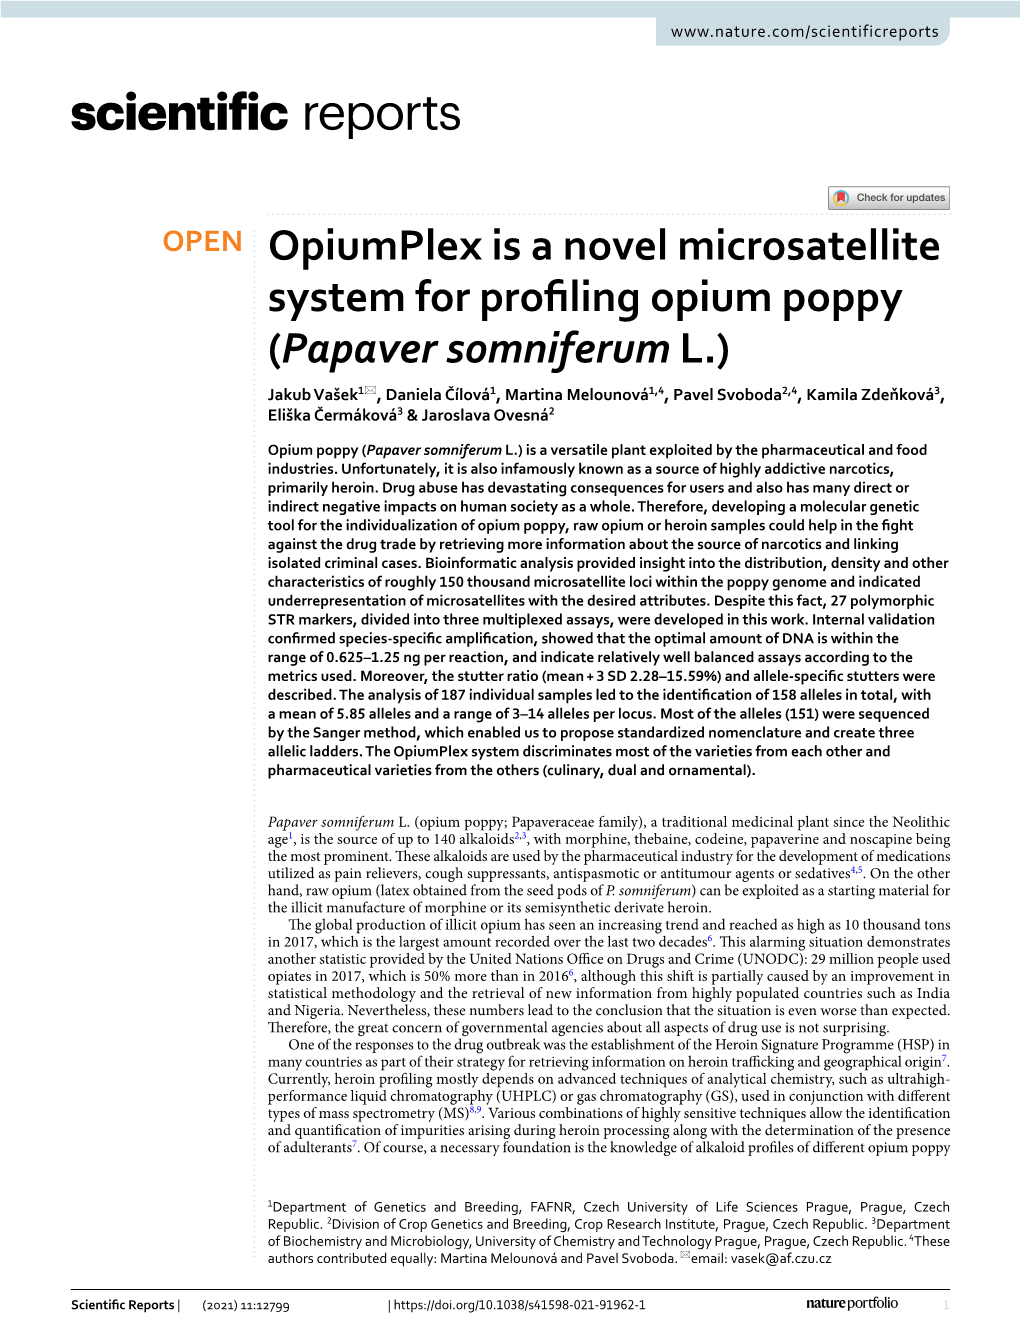 Opiumplex Is a Novel Microsatellite System for Profiling Opium